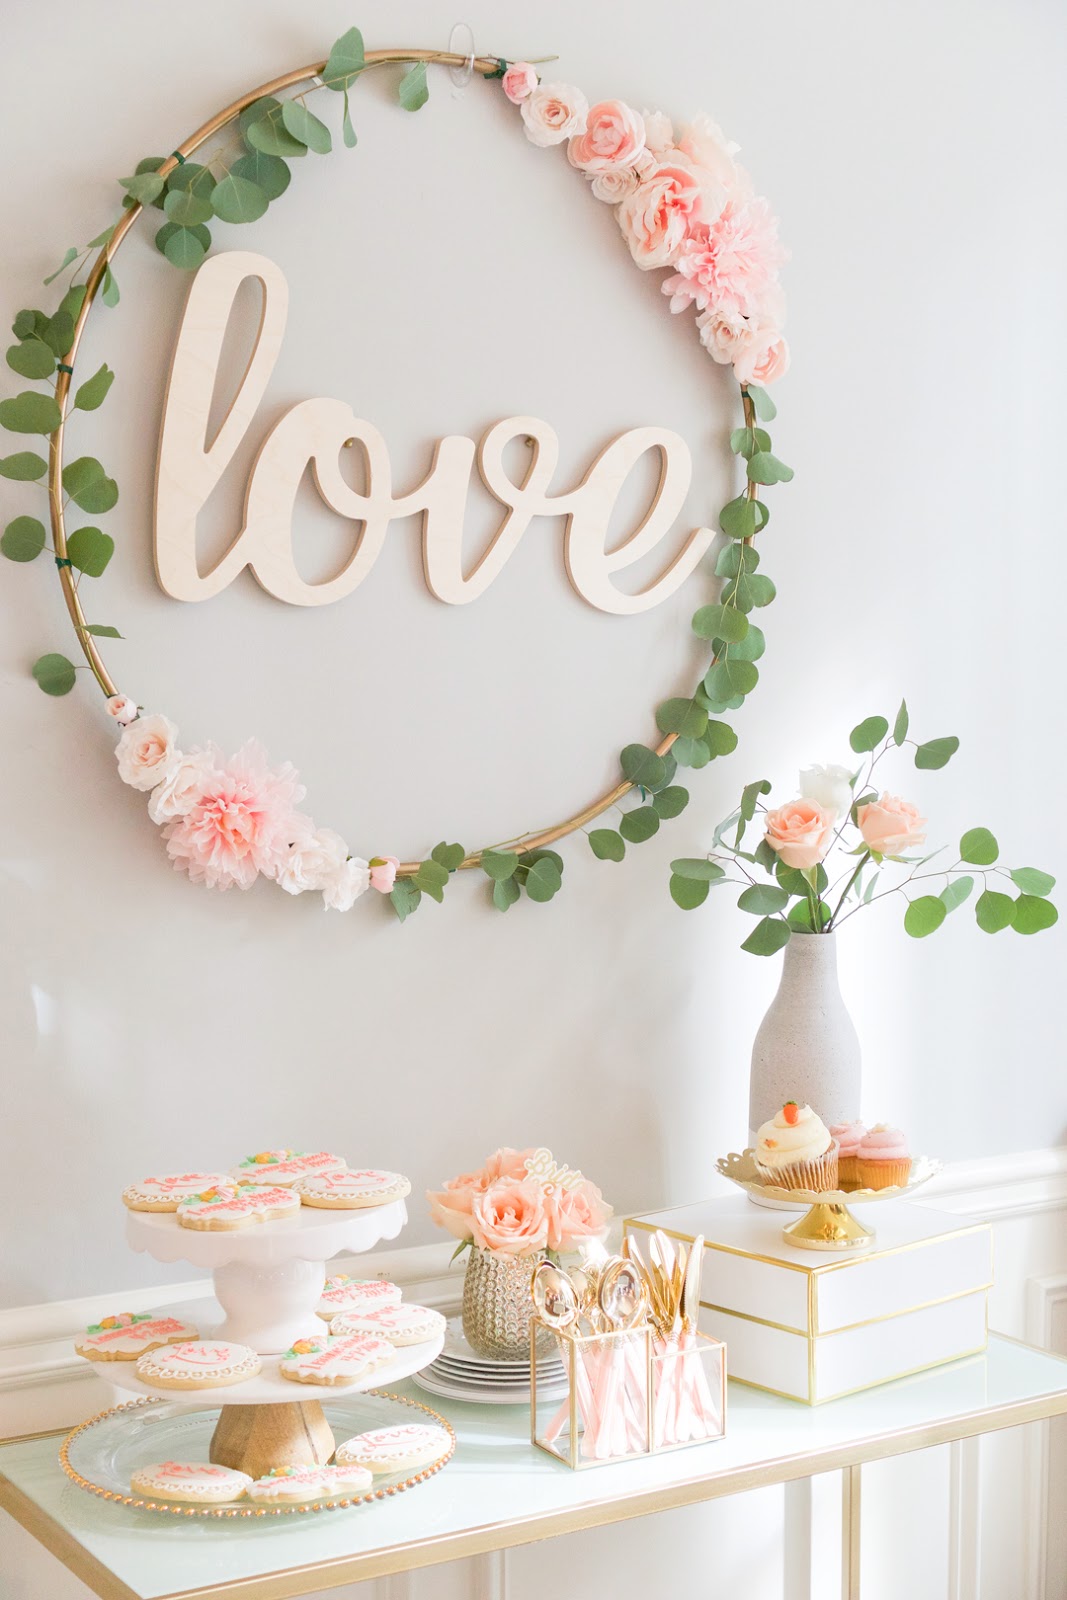 Como hacer coronas gigantes de flores para decorar tu boda (facil y barato)